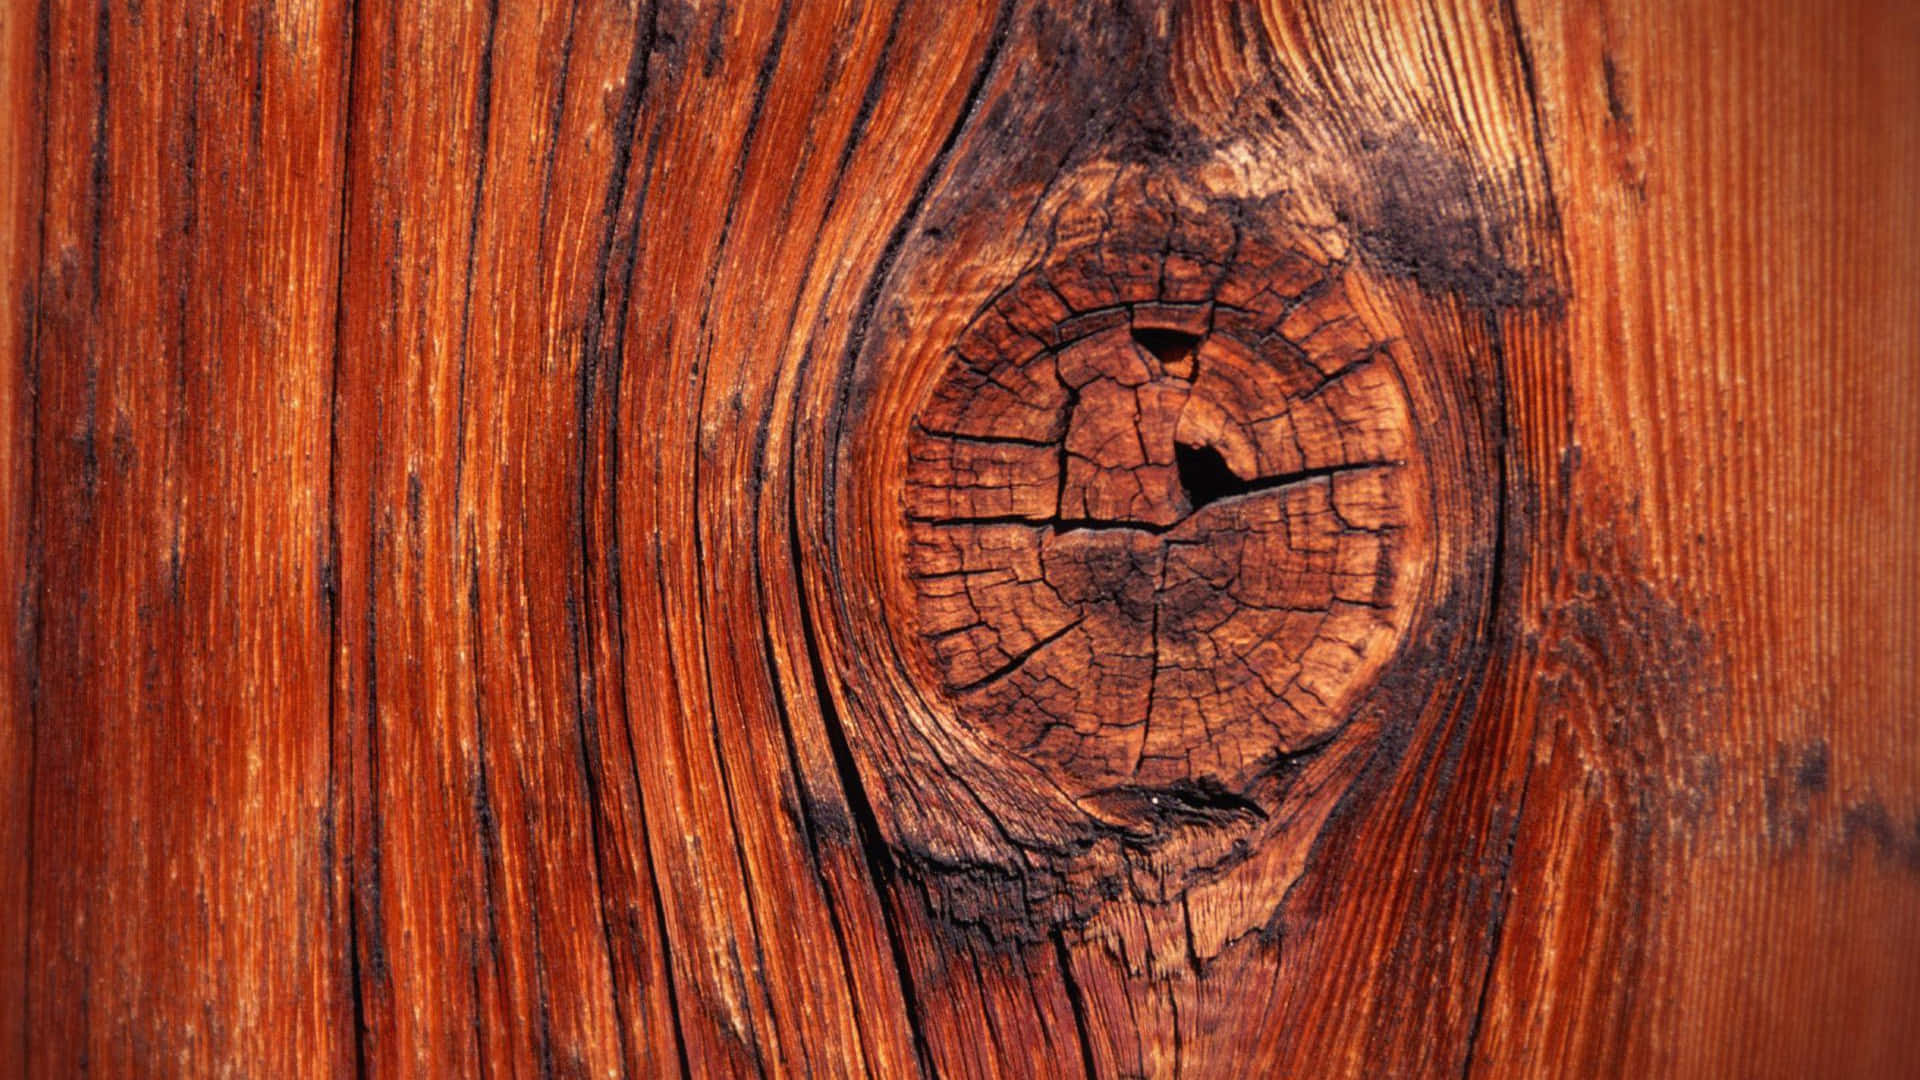 Stunning Details of Wood Grain